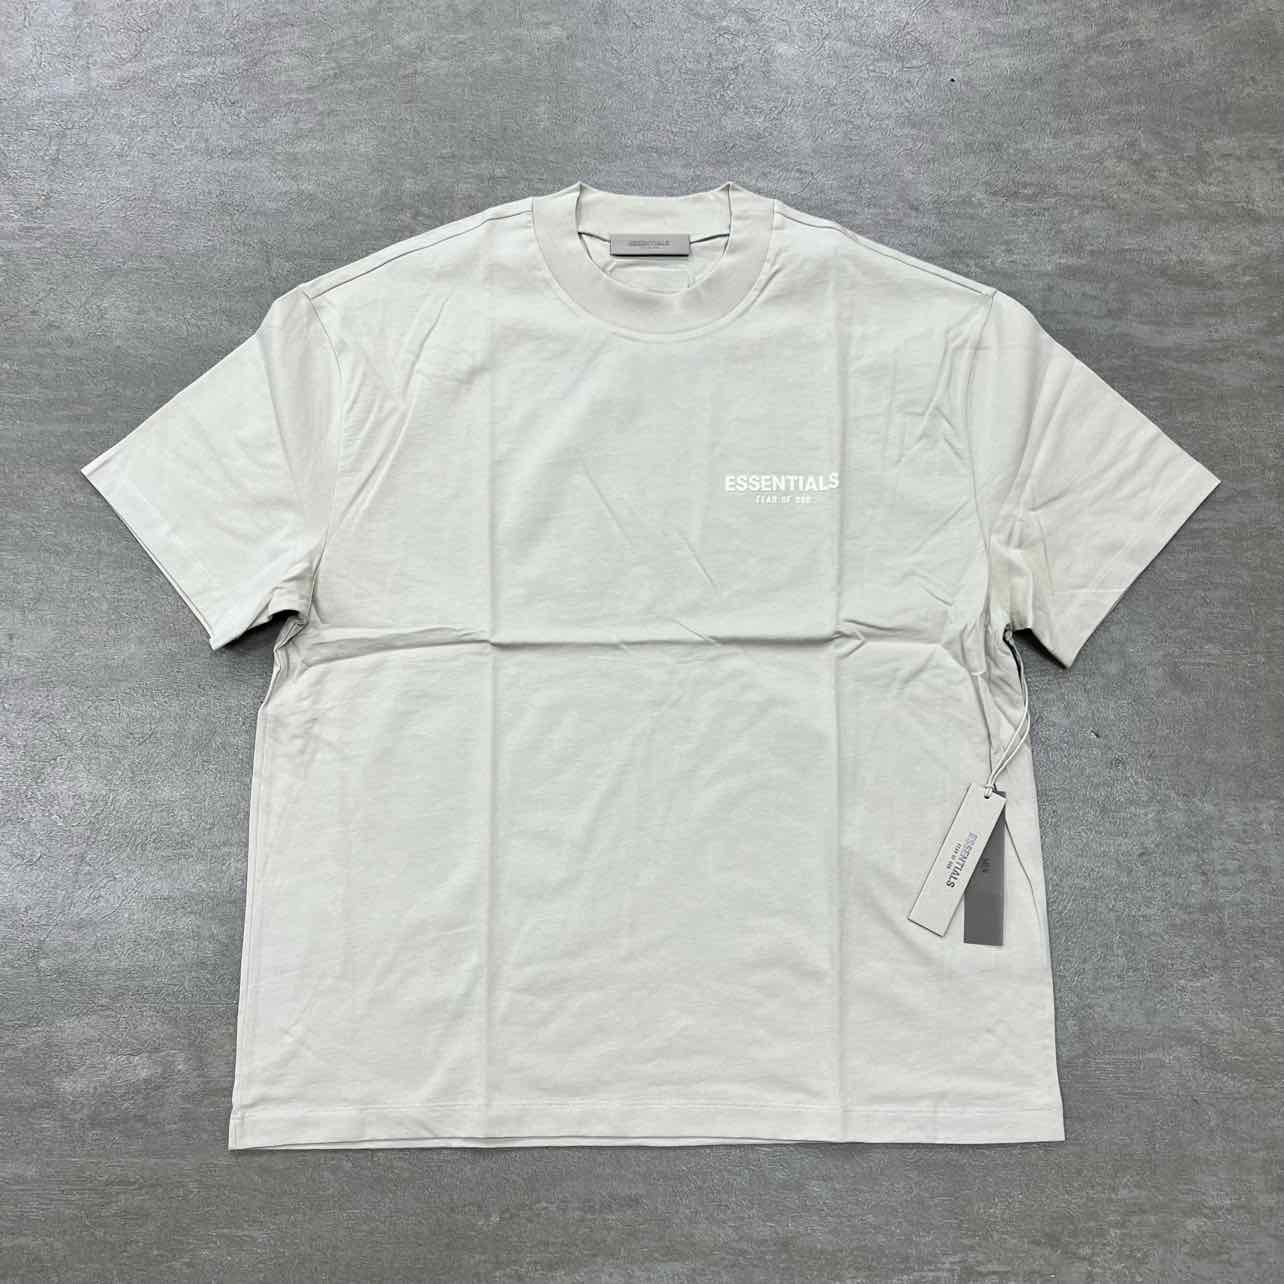 Fear of God T-Shirt "ESSENTIALS" Wheat New Size 2XS